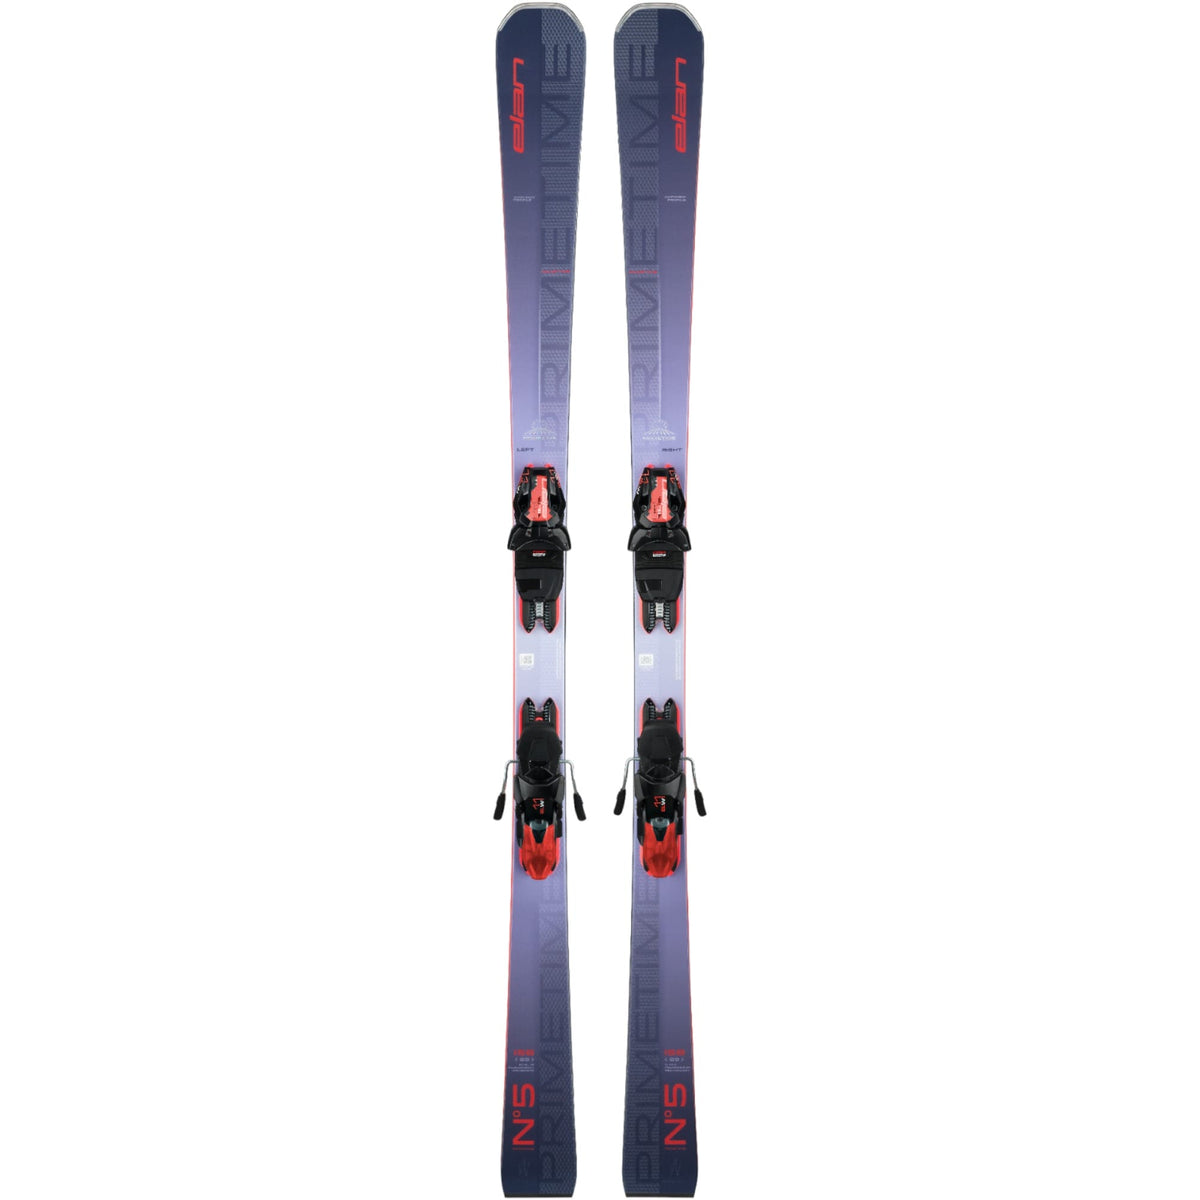 Skis Alpins Primetime N°5 PS + ELW 11 S Femme